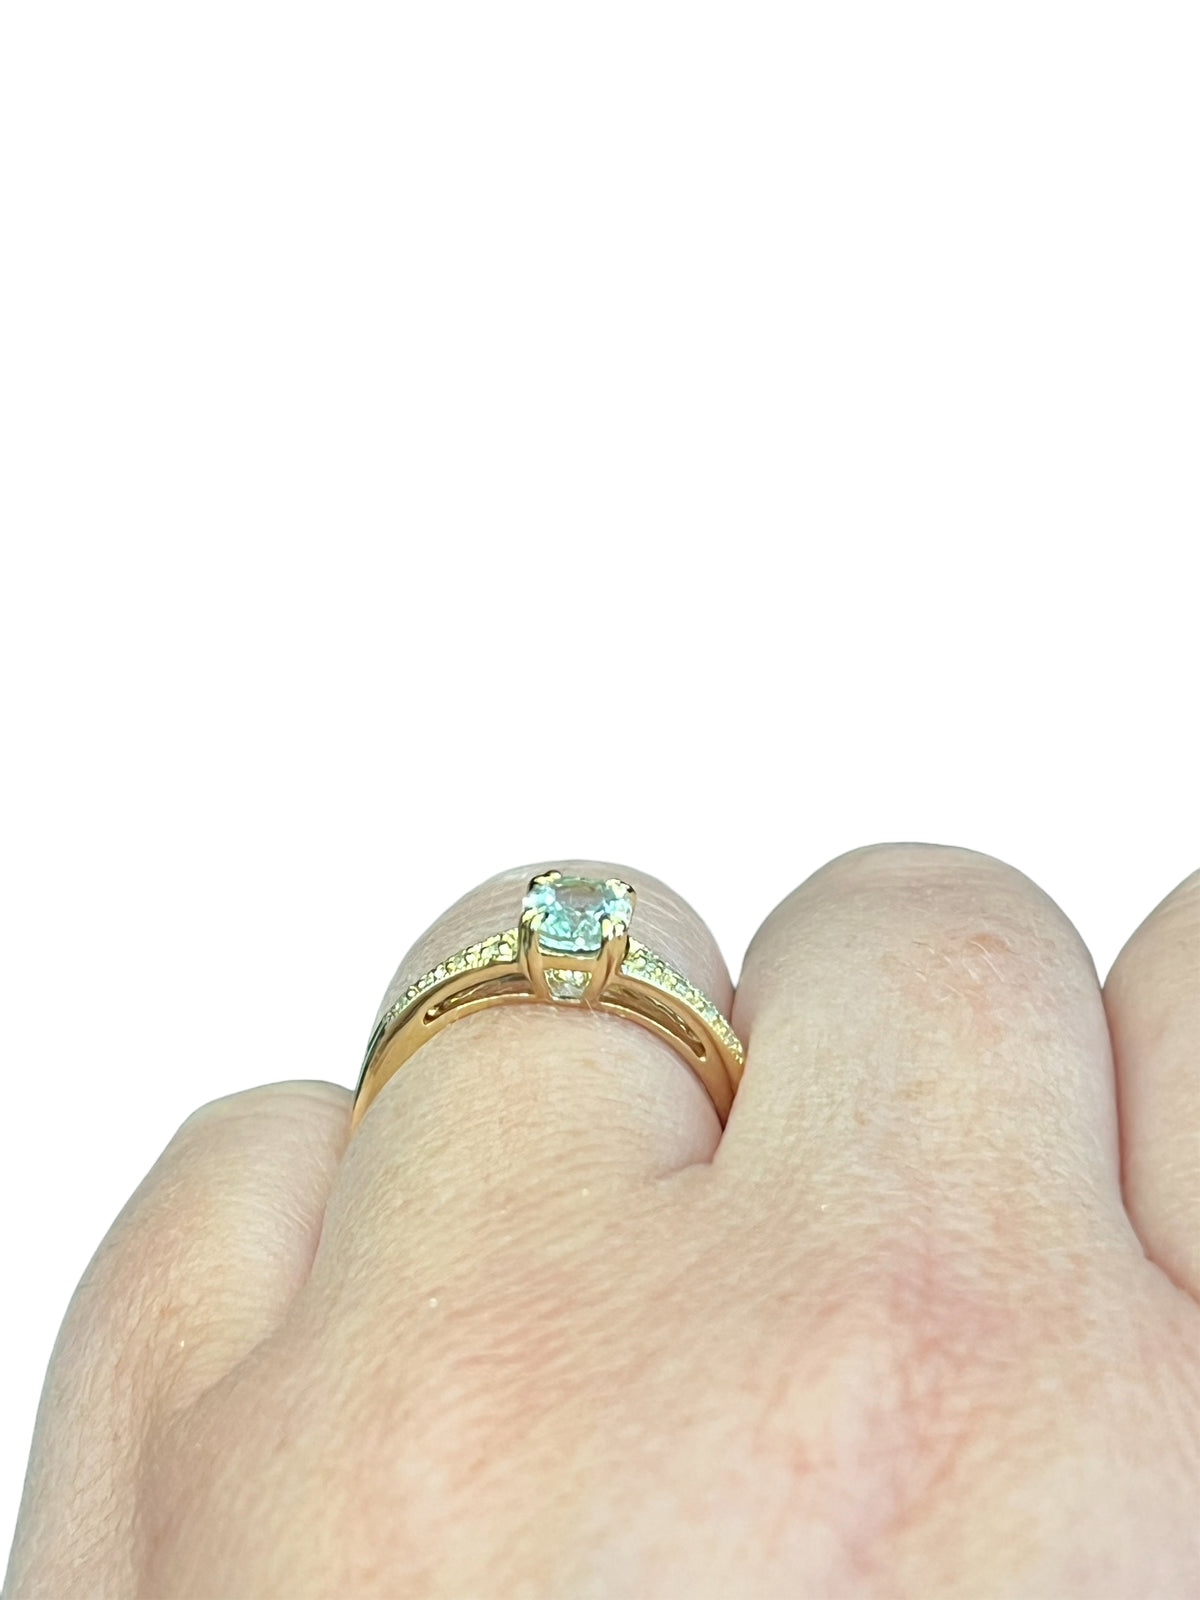 10K Yellow Gold 0.65cttw Aquamarine and 0.04cttw Diamond Ring, size 7